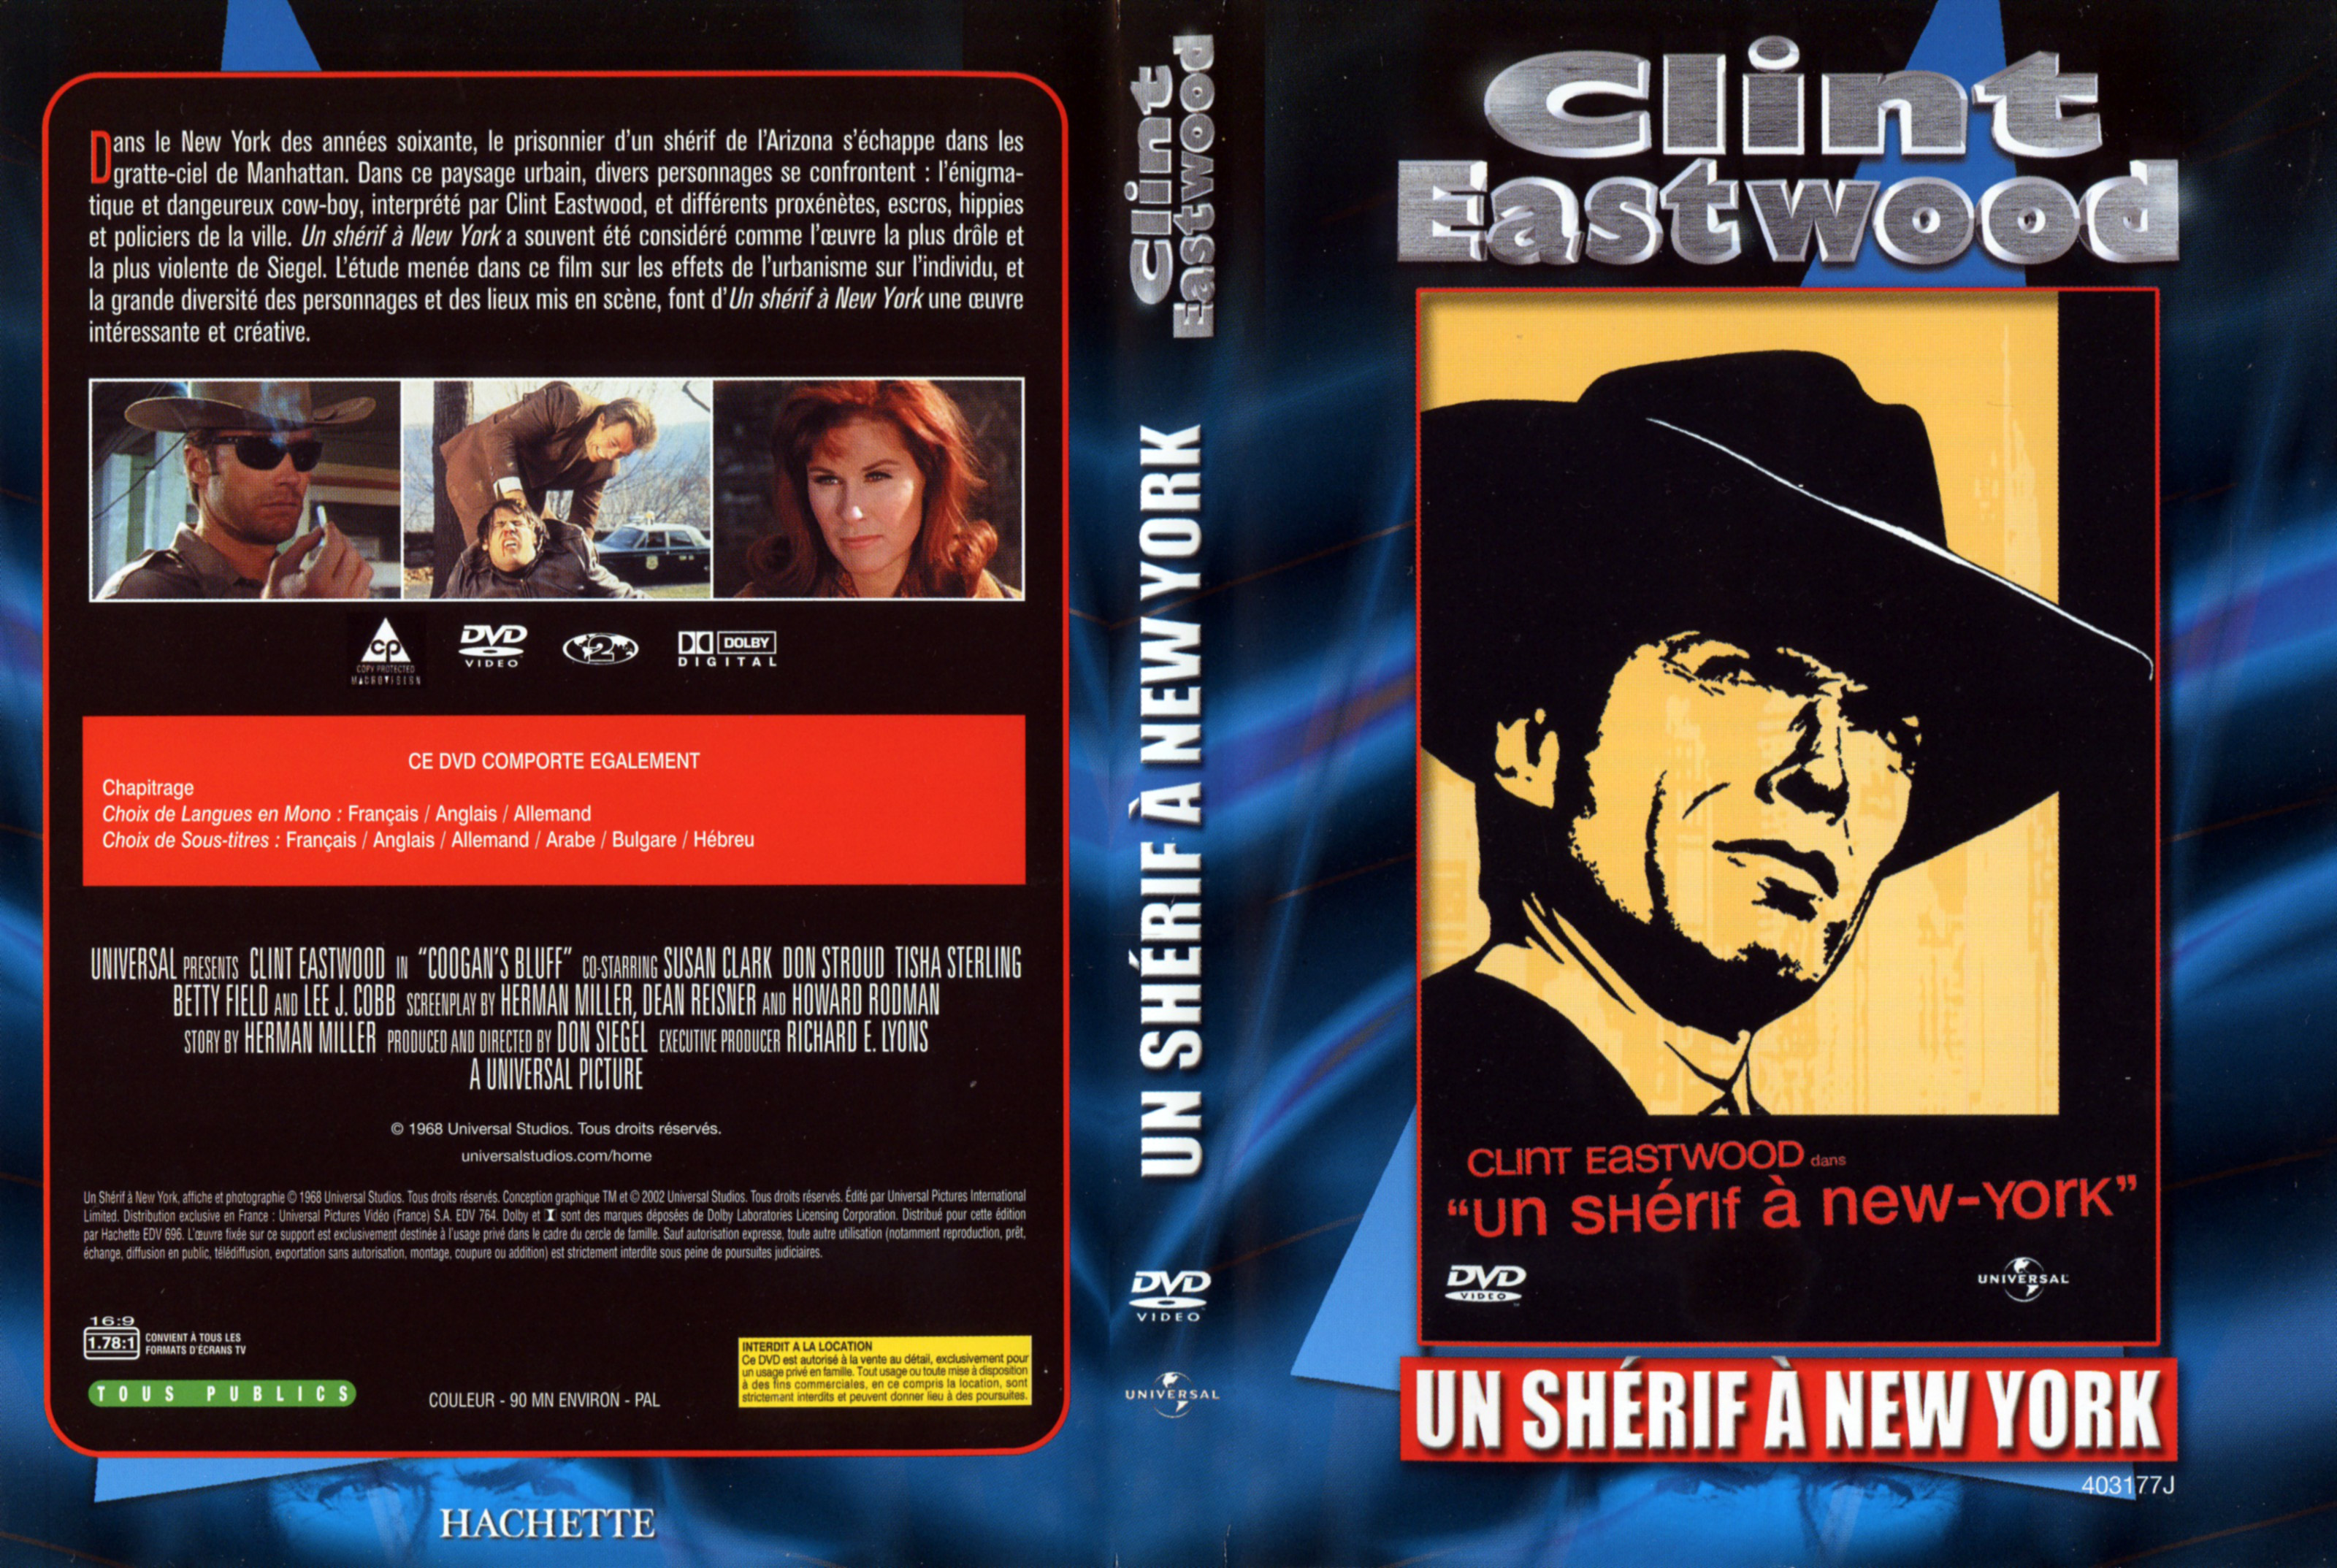 Jaquette DVD Un sherif  New-York v2